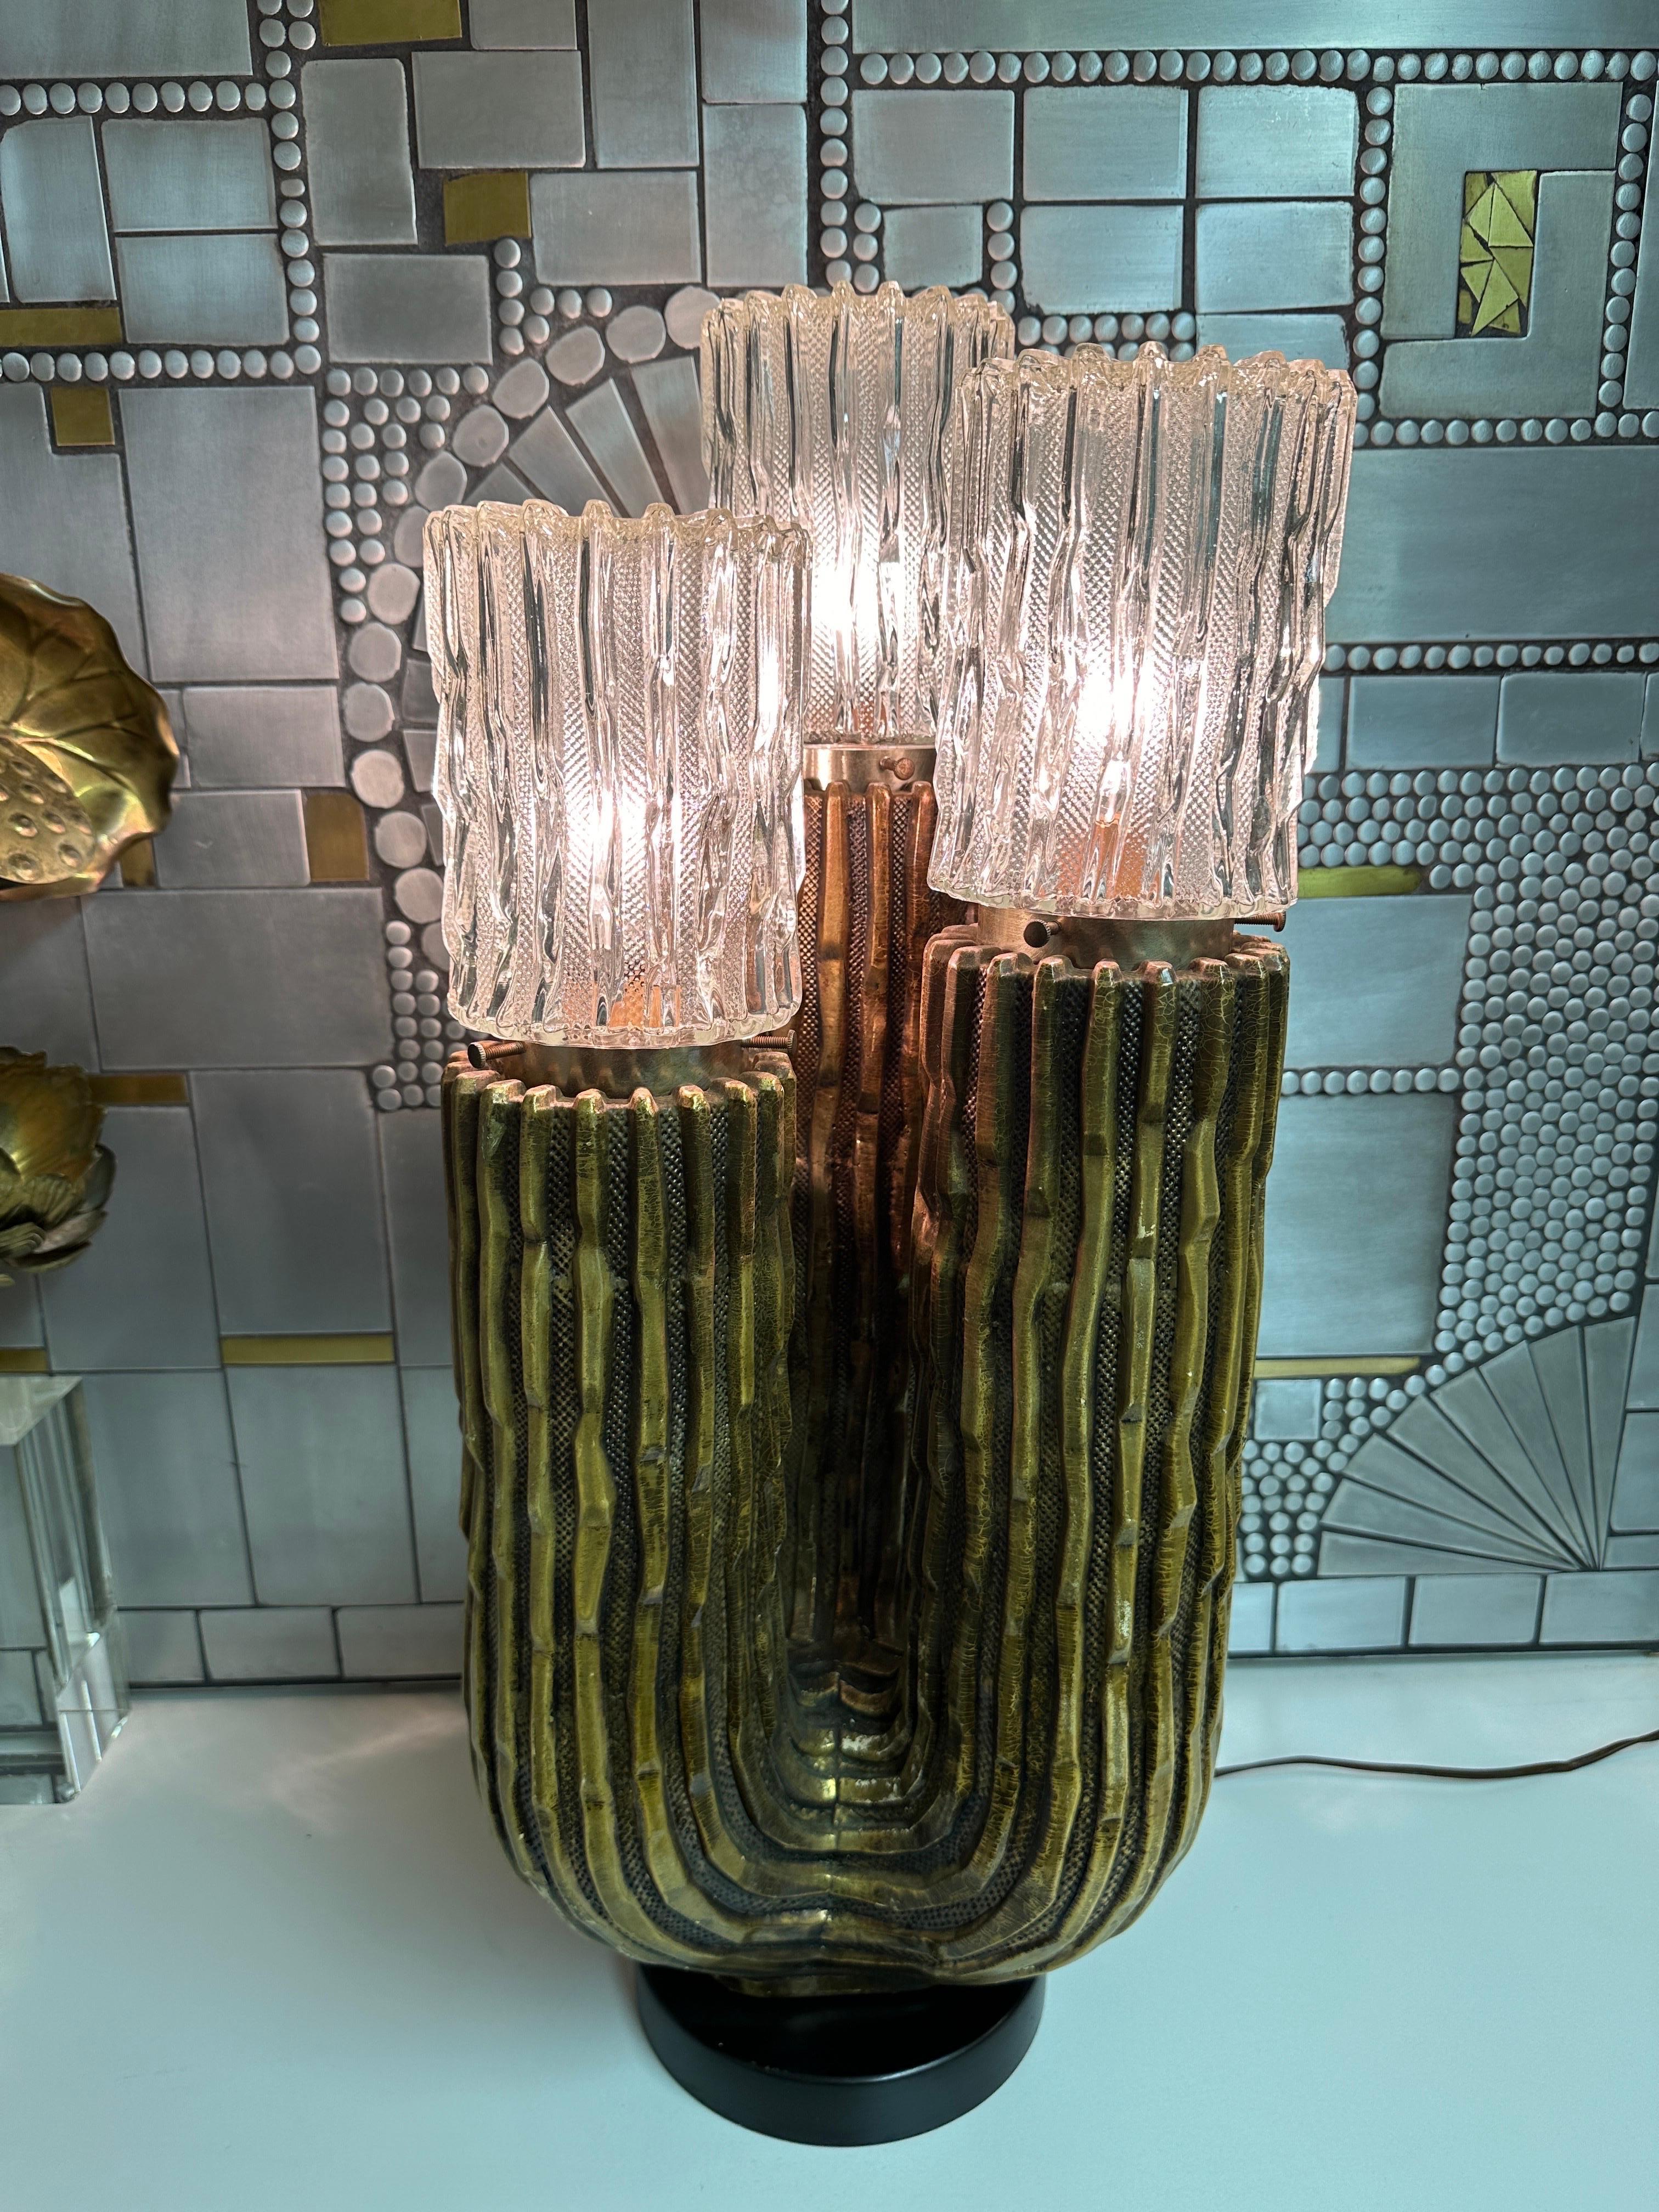 Plaster cactus lamp in antique gold leaf  by Fuggiti Studio
Requires candelabra base bulbs.